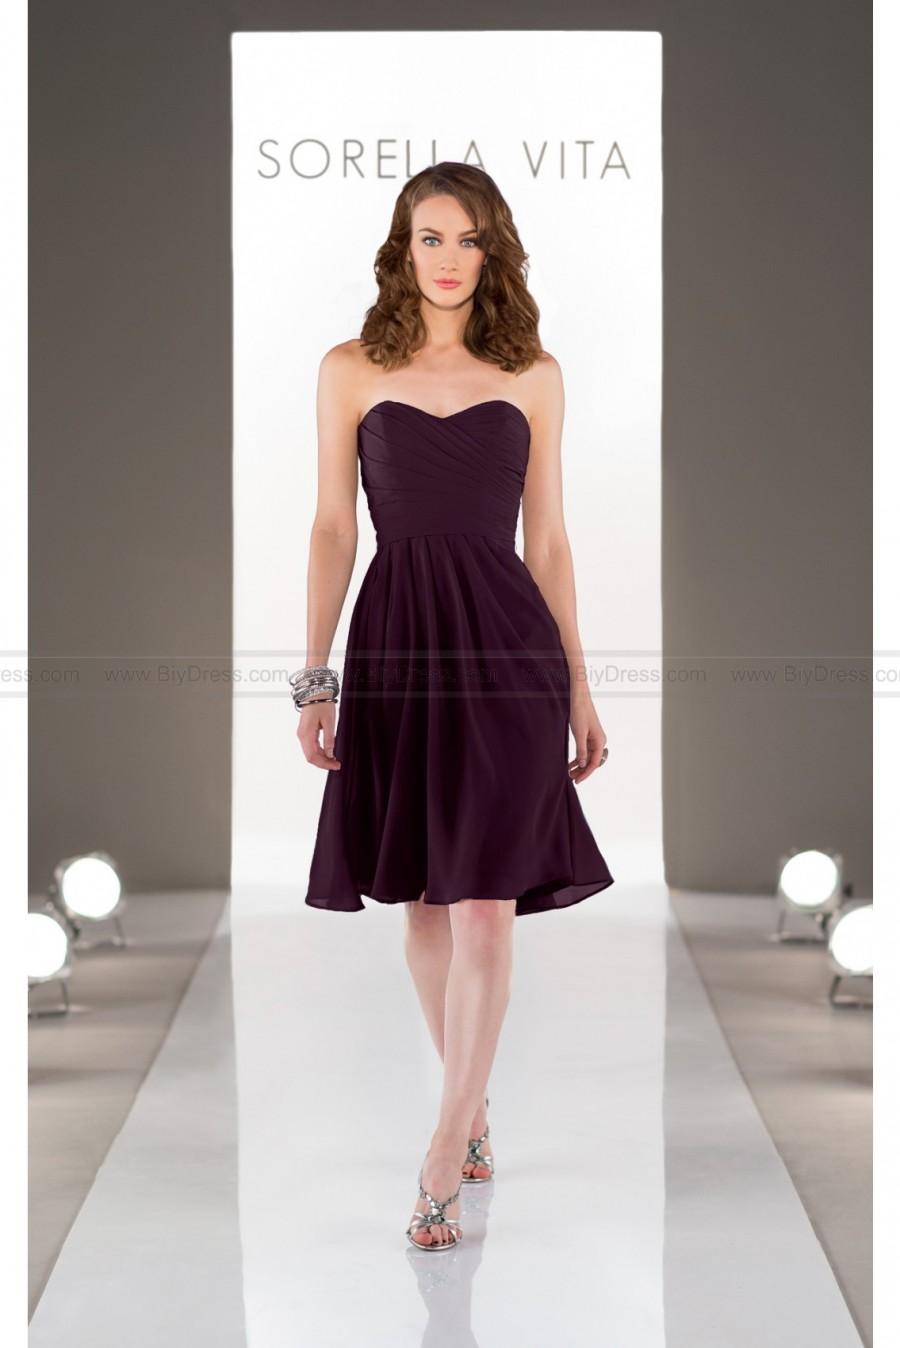 Mariage - Sorella Vita Chiffon Bridesmaid Dress Style 8529